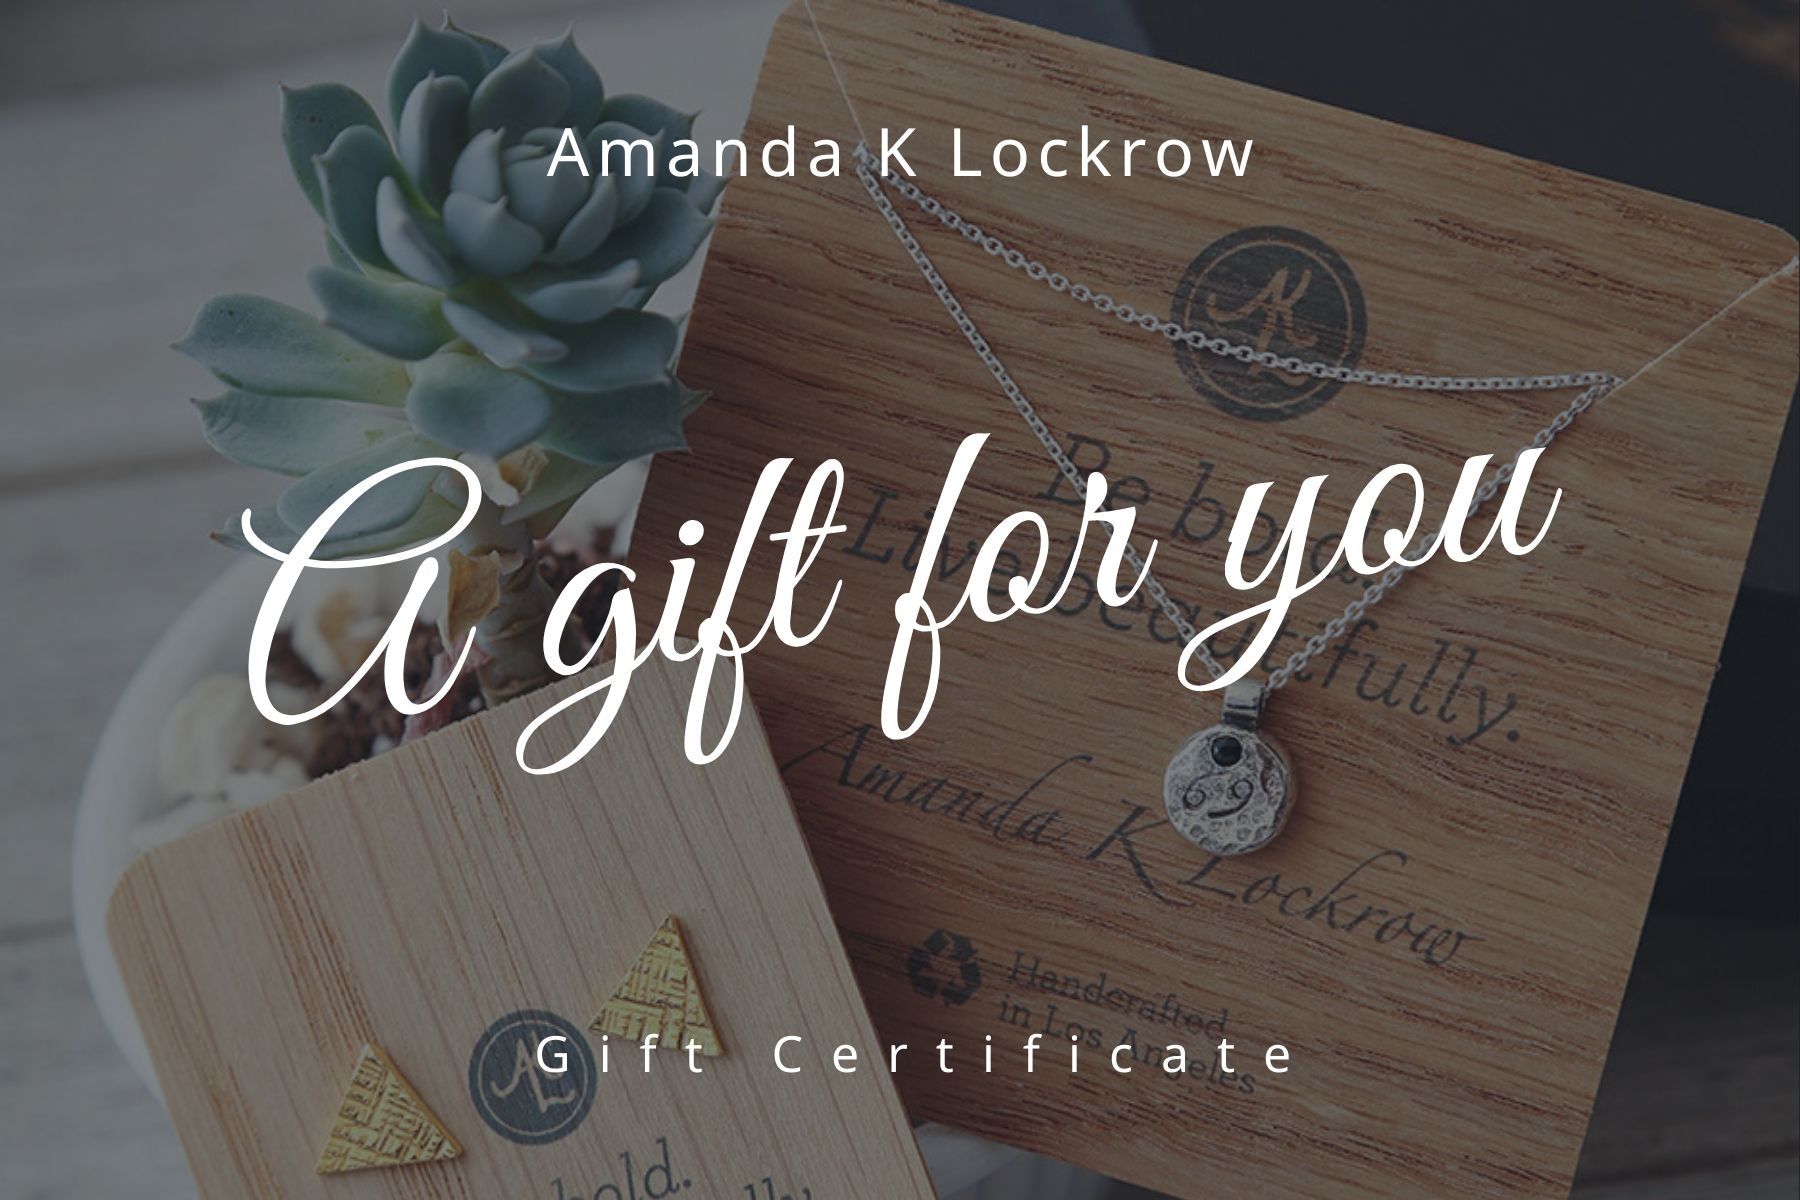 Amanda K Lockrow Gift Certificate gift card Amanda K Lockrow 